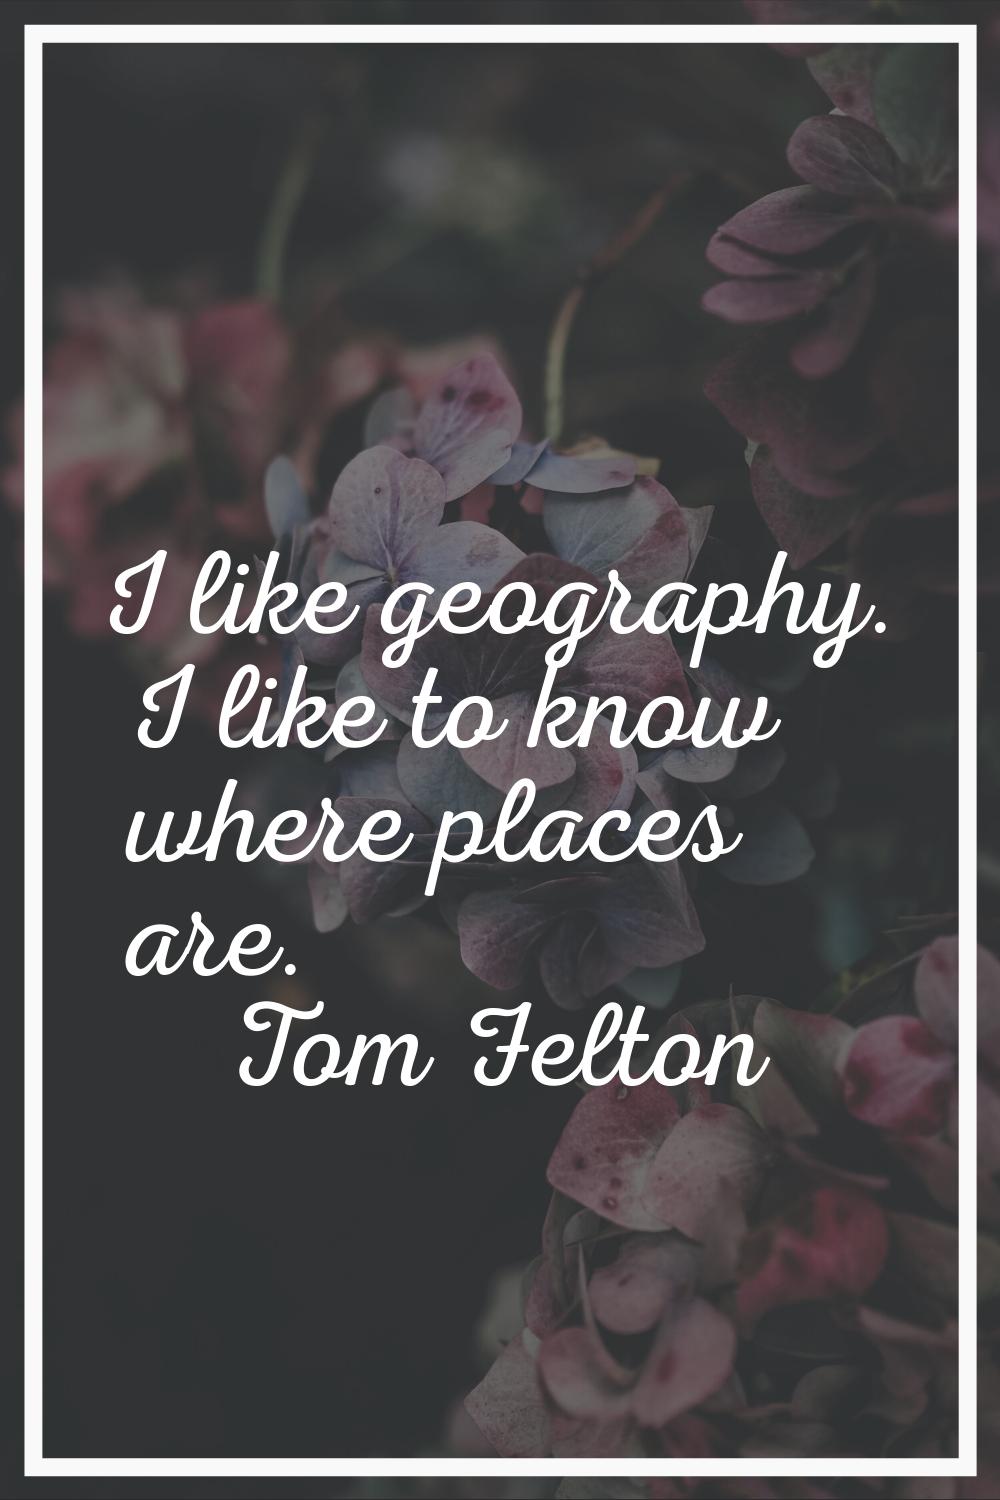 I like geography. I like to know where places are.